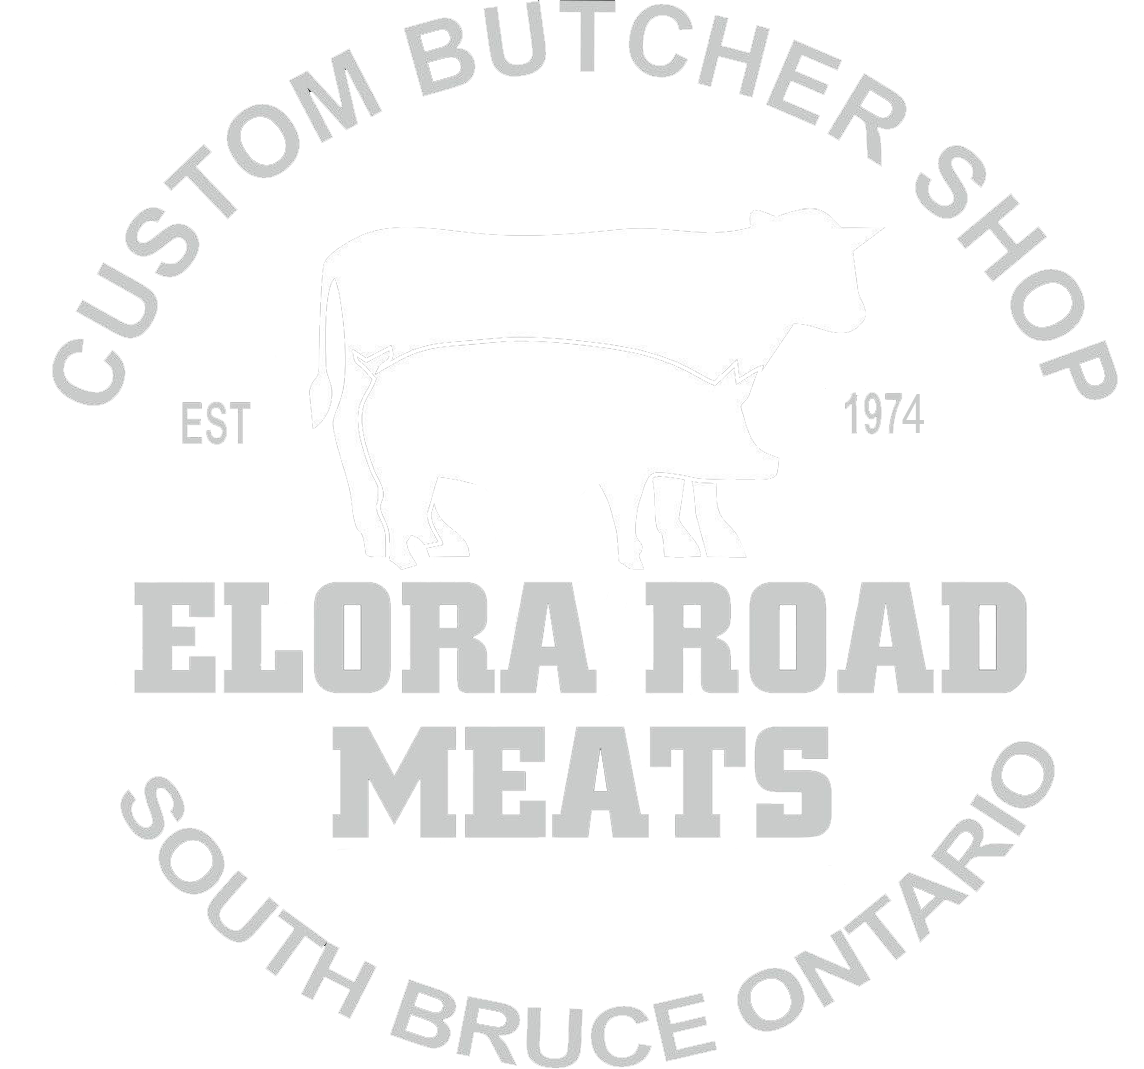 Elora Road Meats